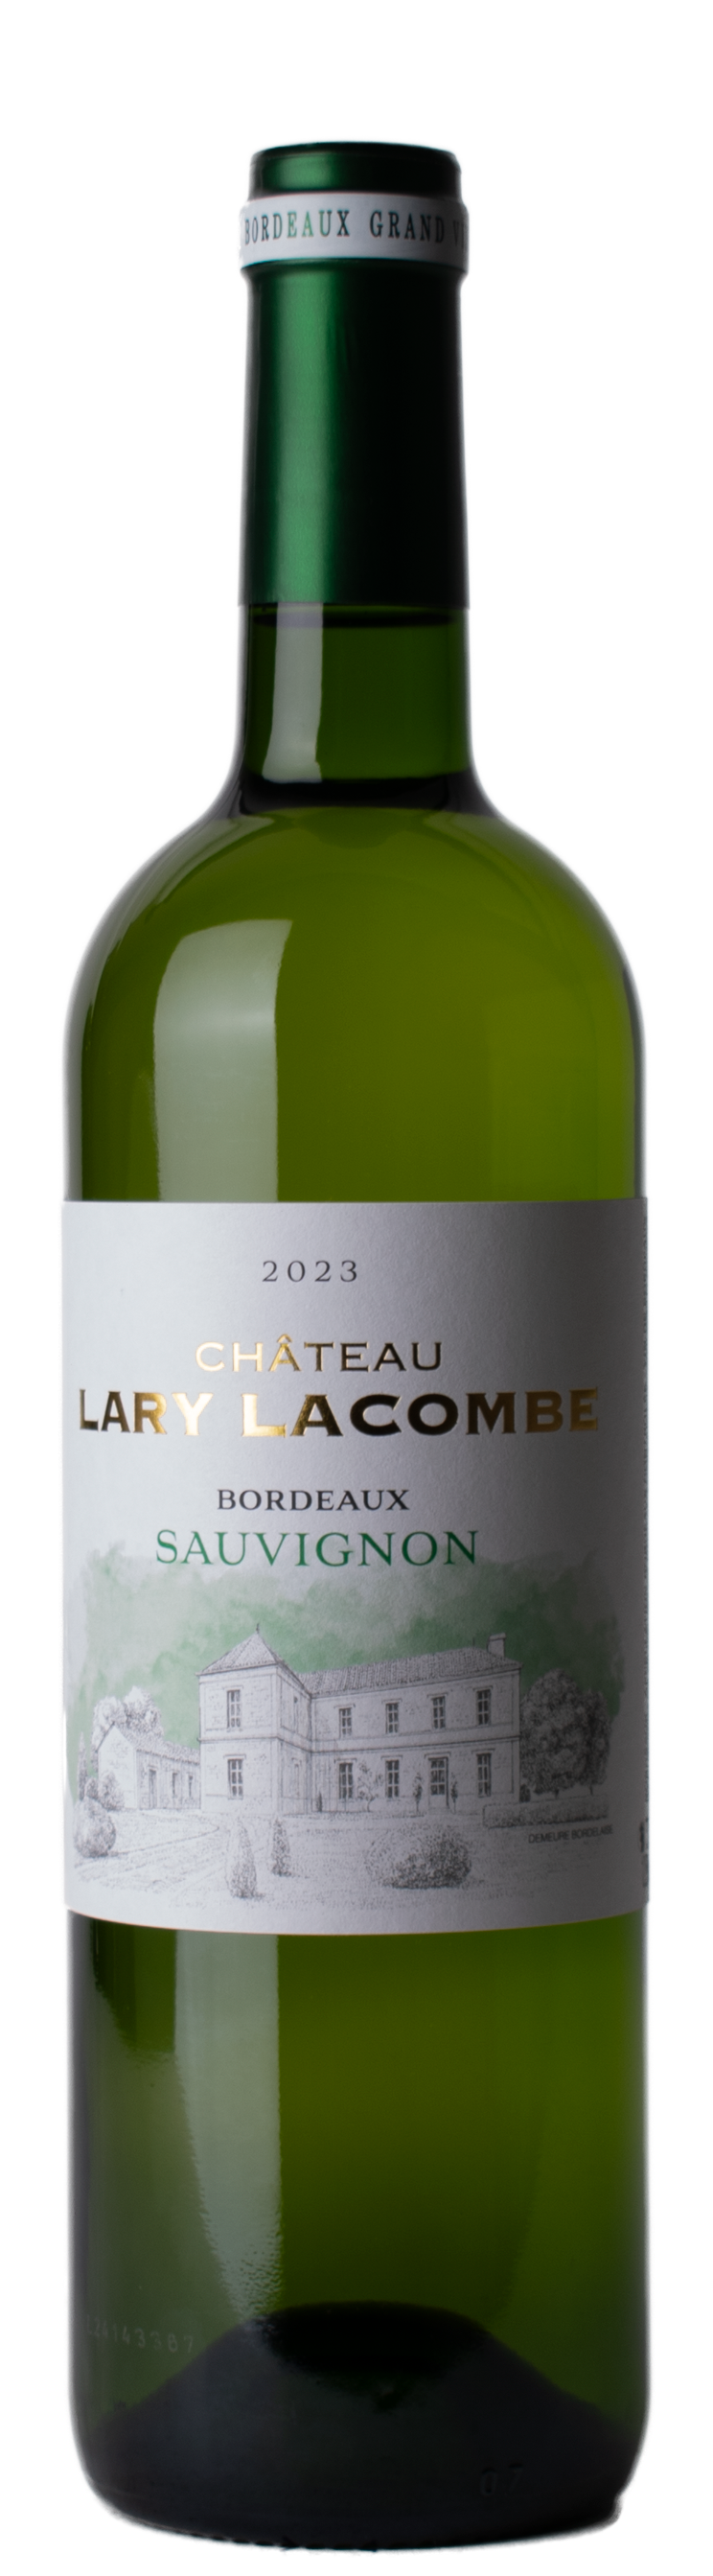 Bordeaux blanc 2023 Sauvignon Lary Lacombe